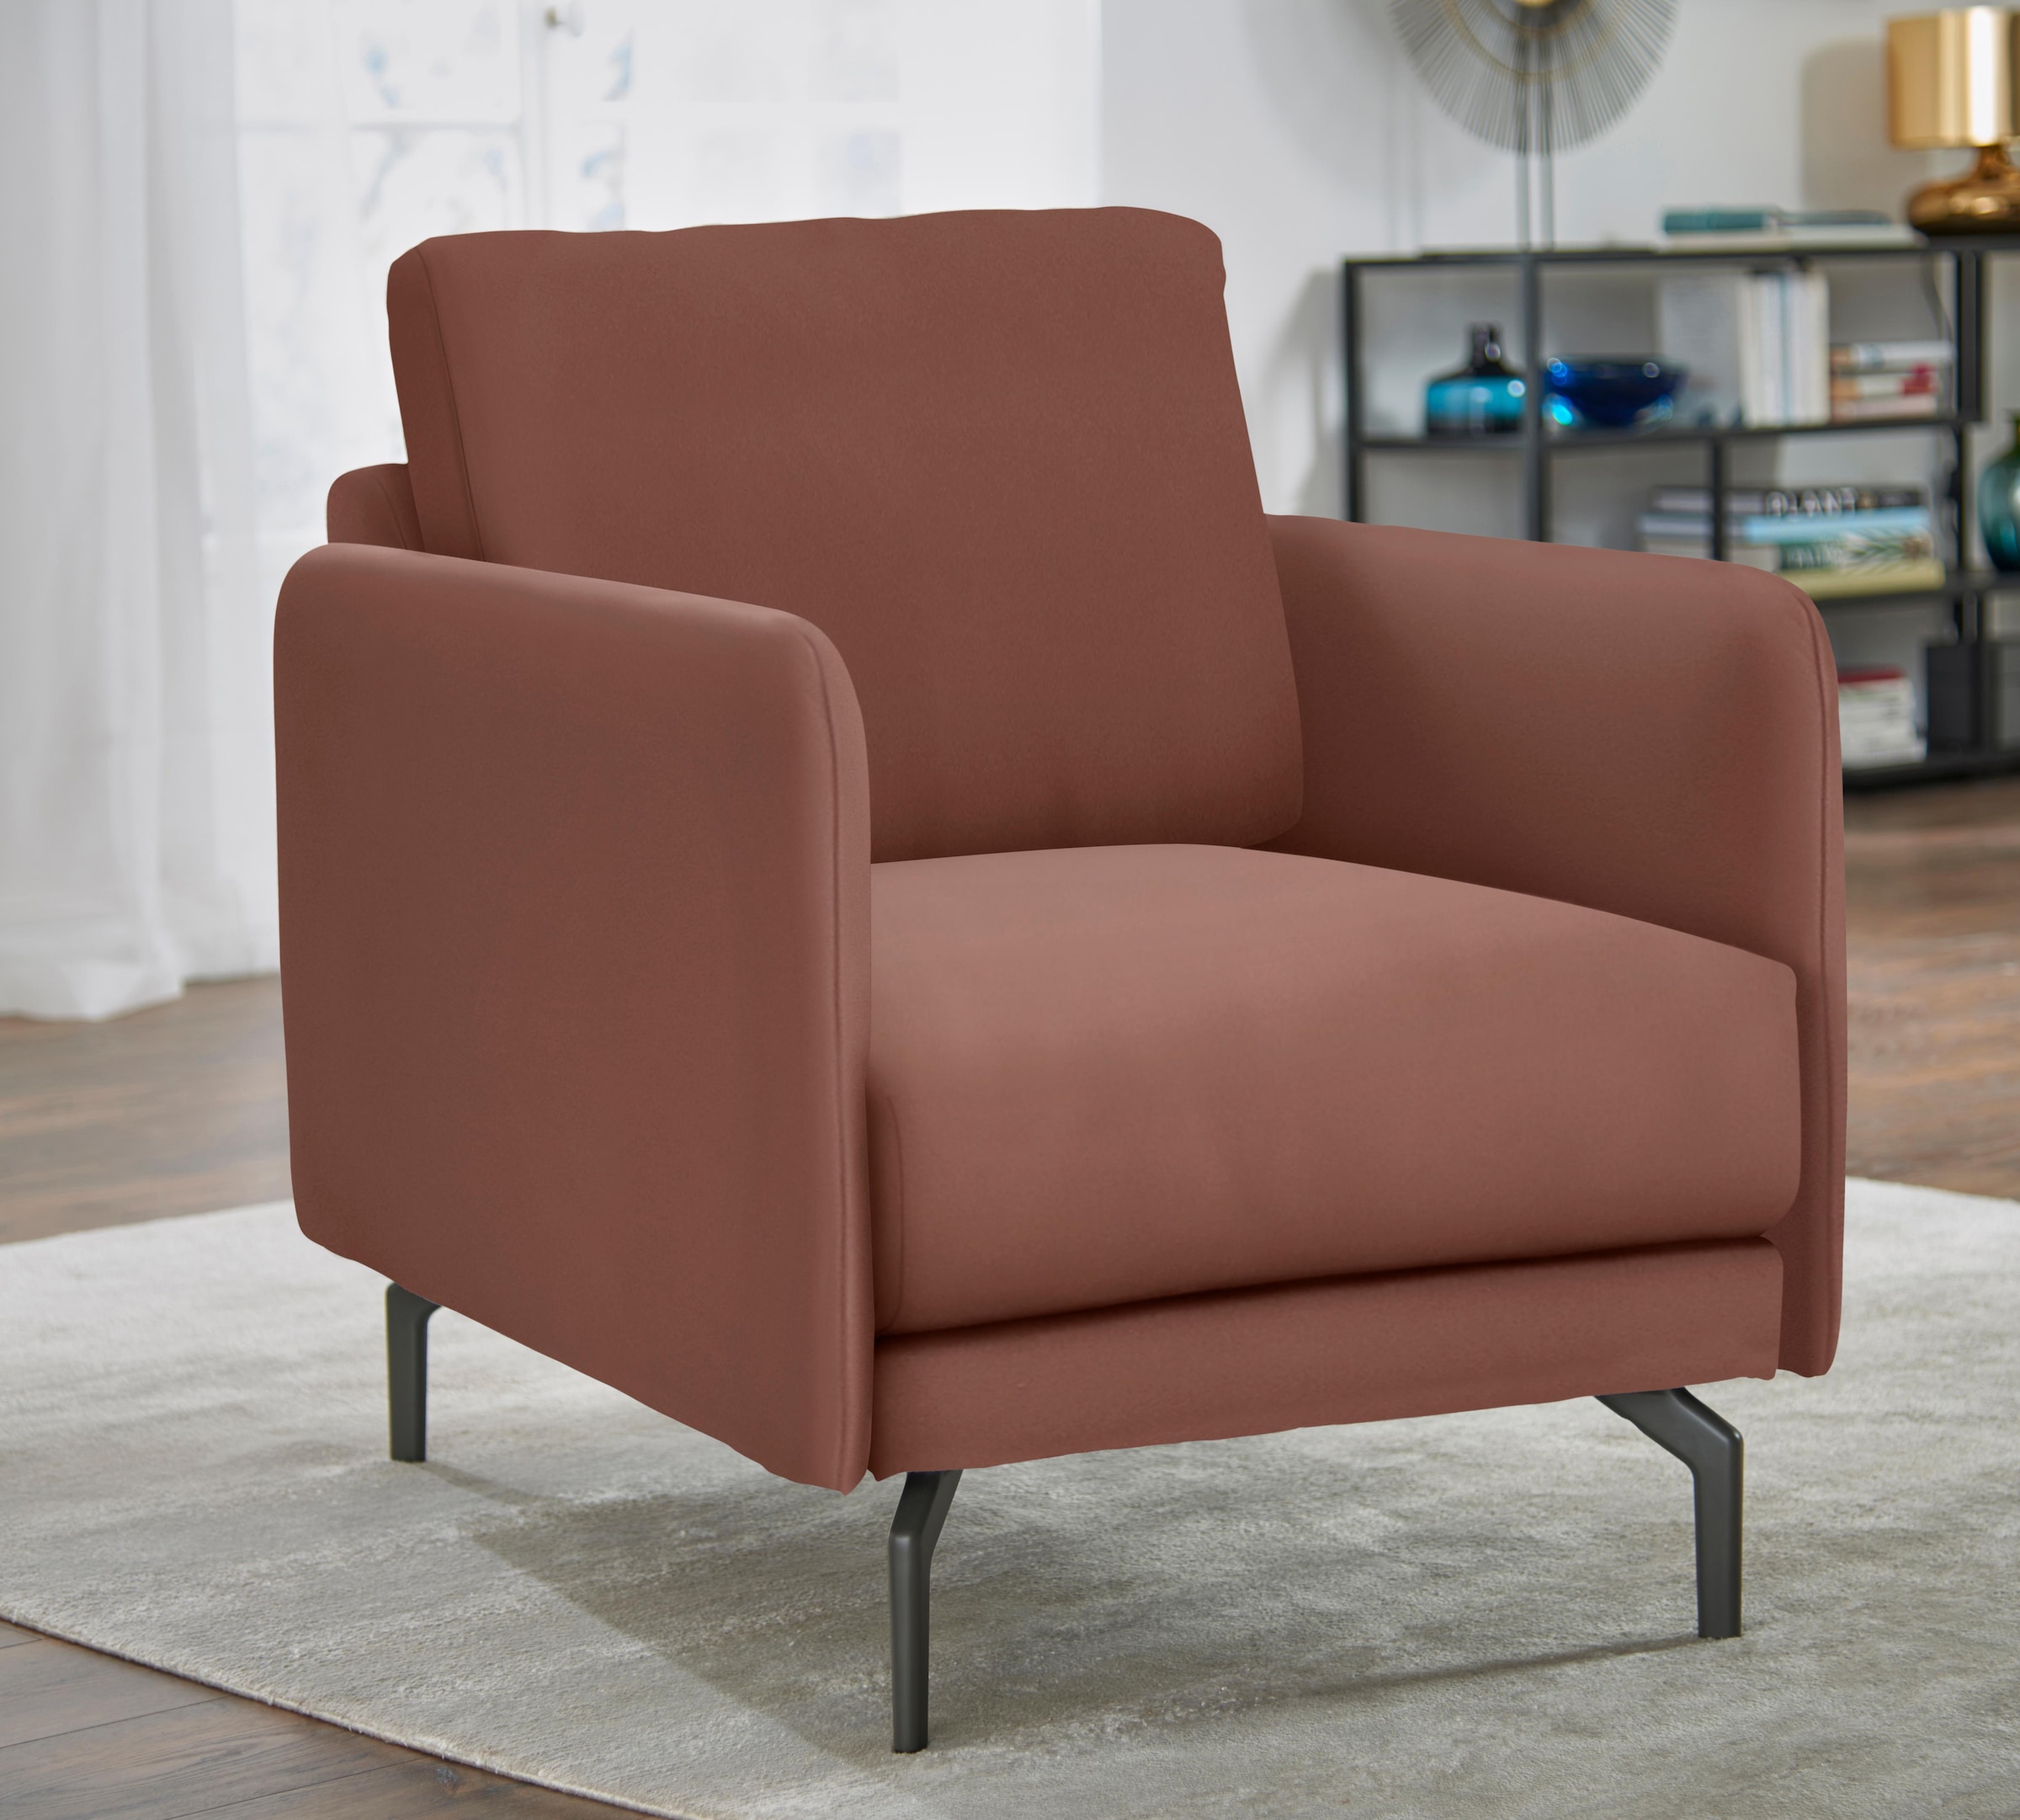 hülsta sofa Sessel »hs.450«, Armlehne sehr schmal, Breite 70 cm, Alugussfuß Umbragrau